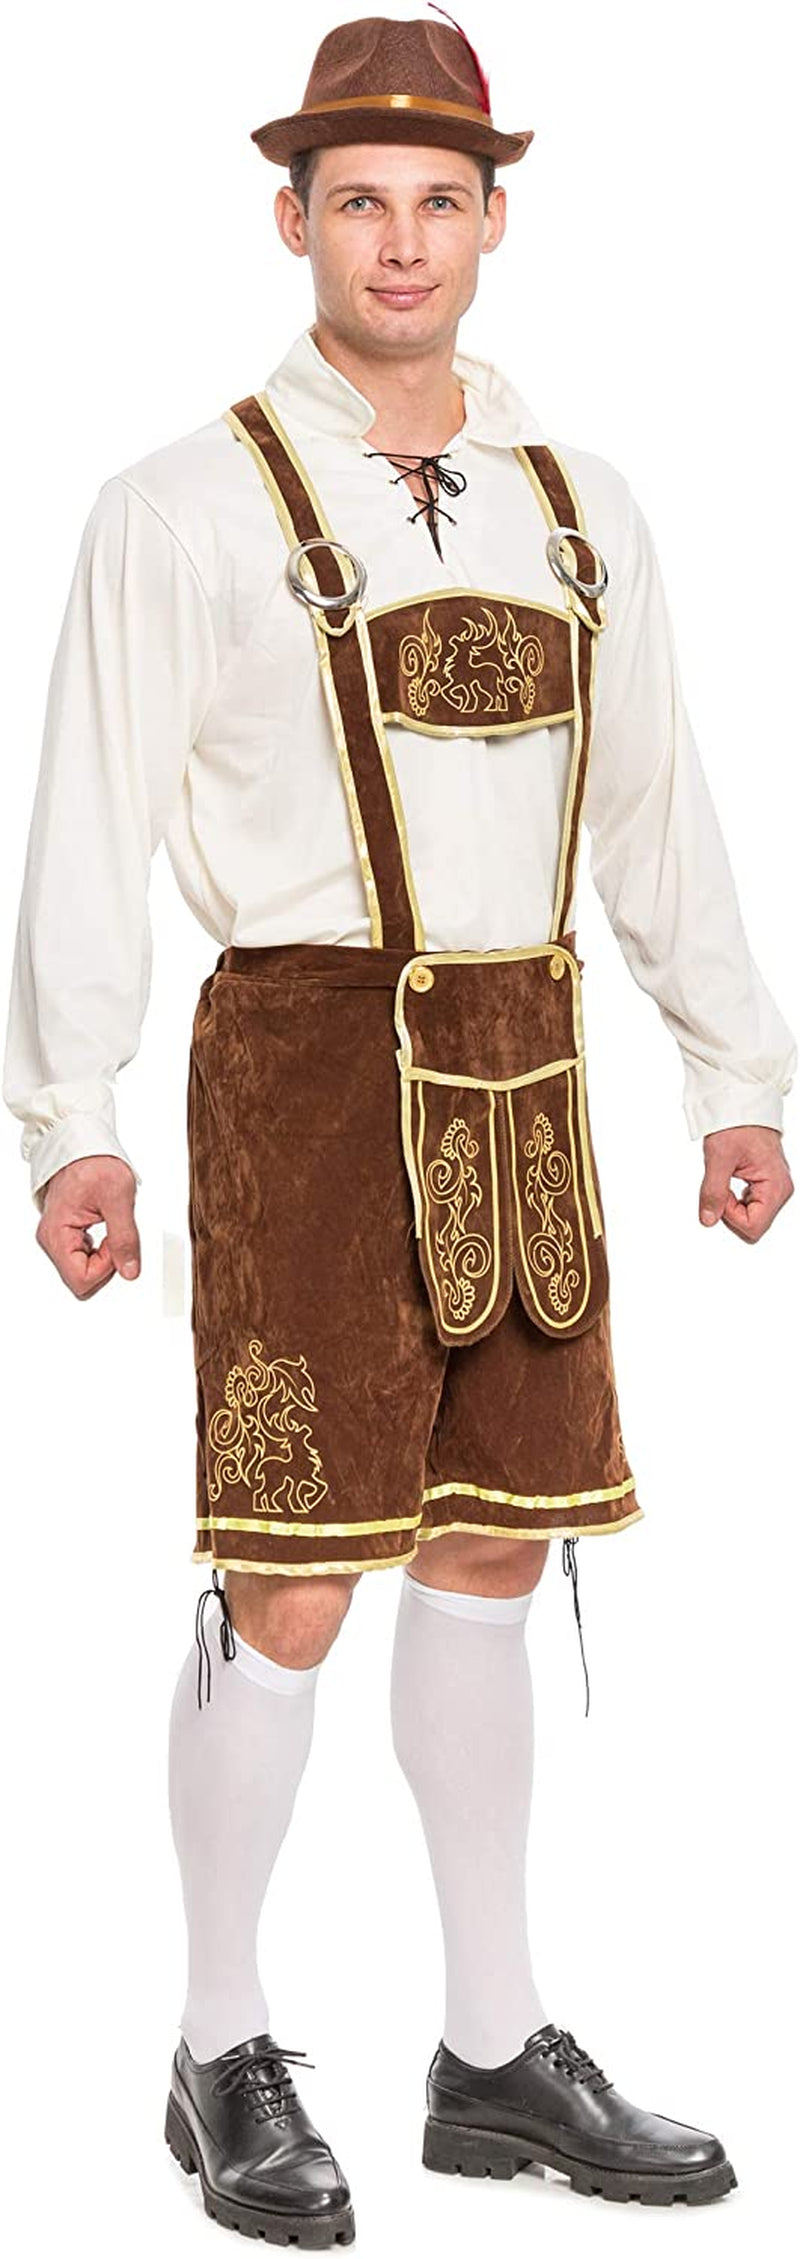 Spooktacular Creations Men’S German Bavarian Oktoberfest Costume Set for Halloween Dress up Party and Beer Festival  Spooktacular Creations   